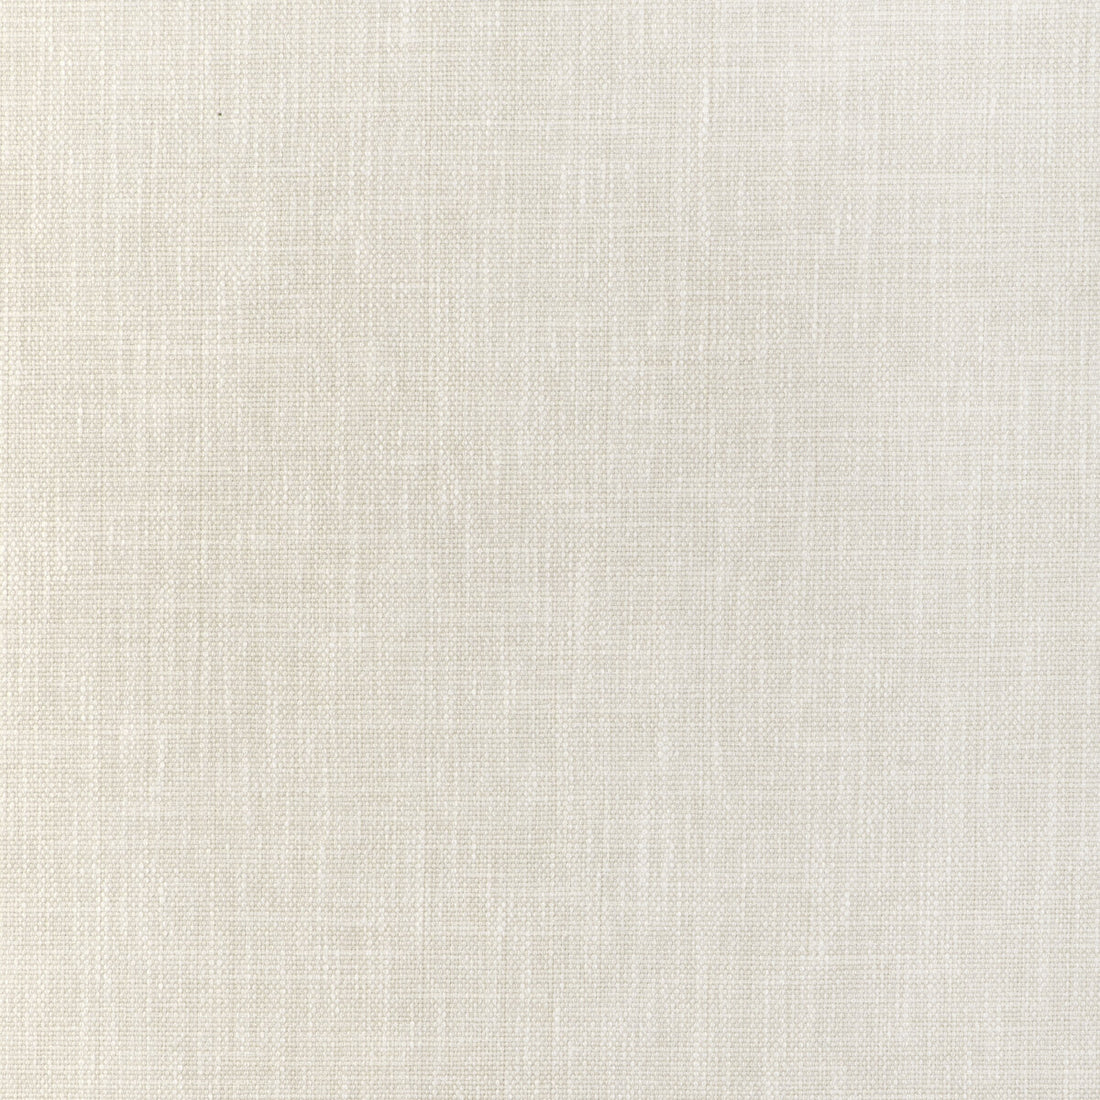 Kravet Smart fabric in 37065-1 color - pattern 37065.1.0 - by Kravet Smart